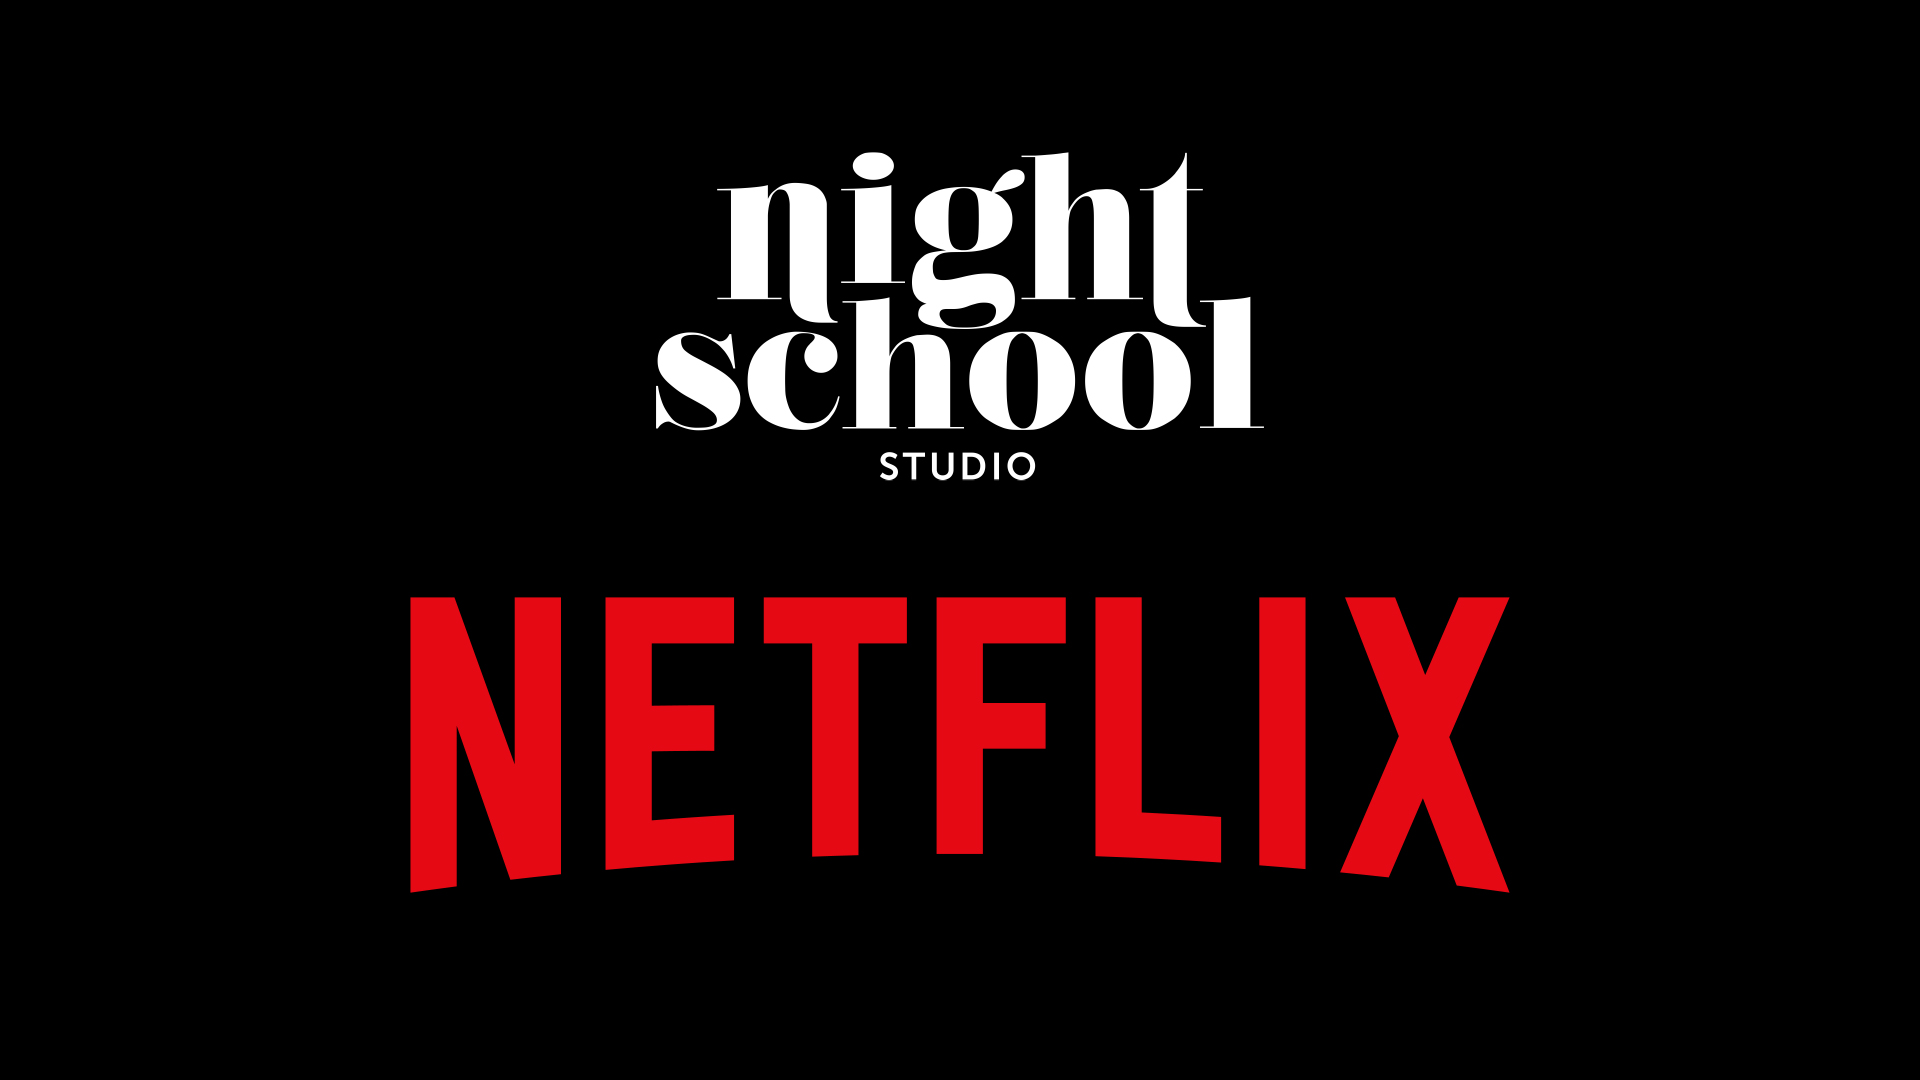 Netflix Acquire Night School Studio